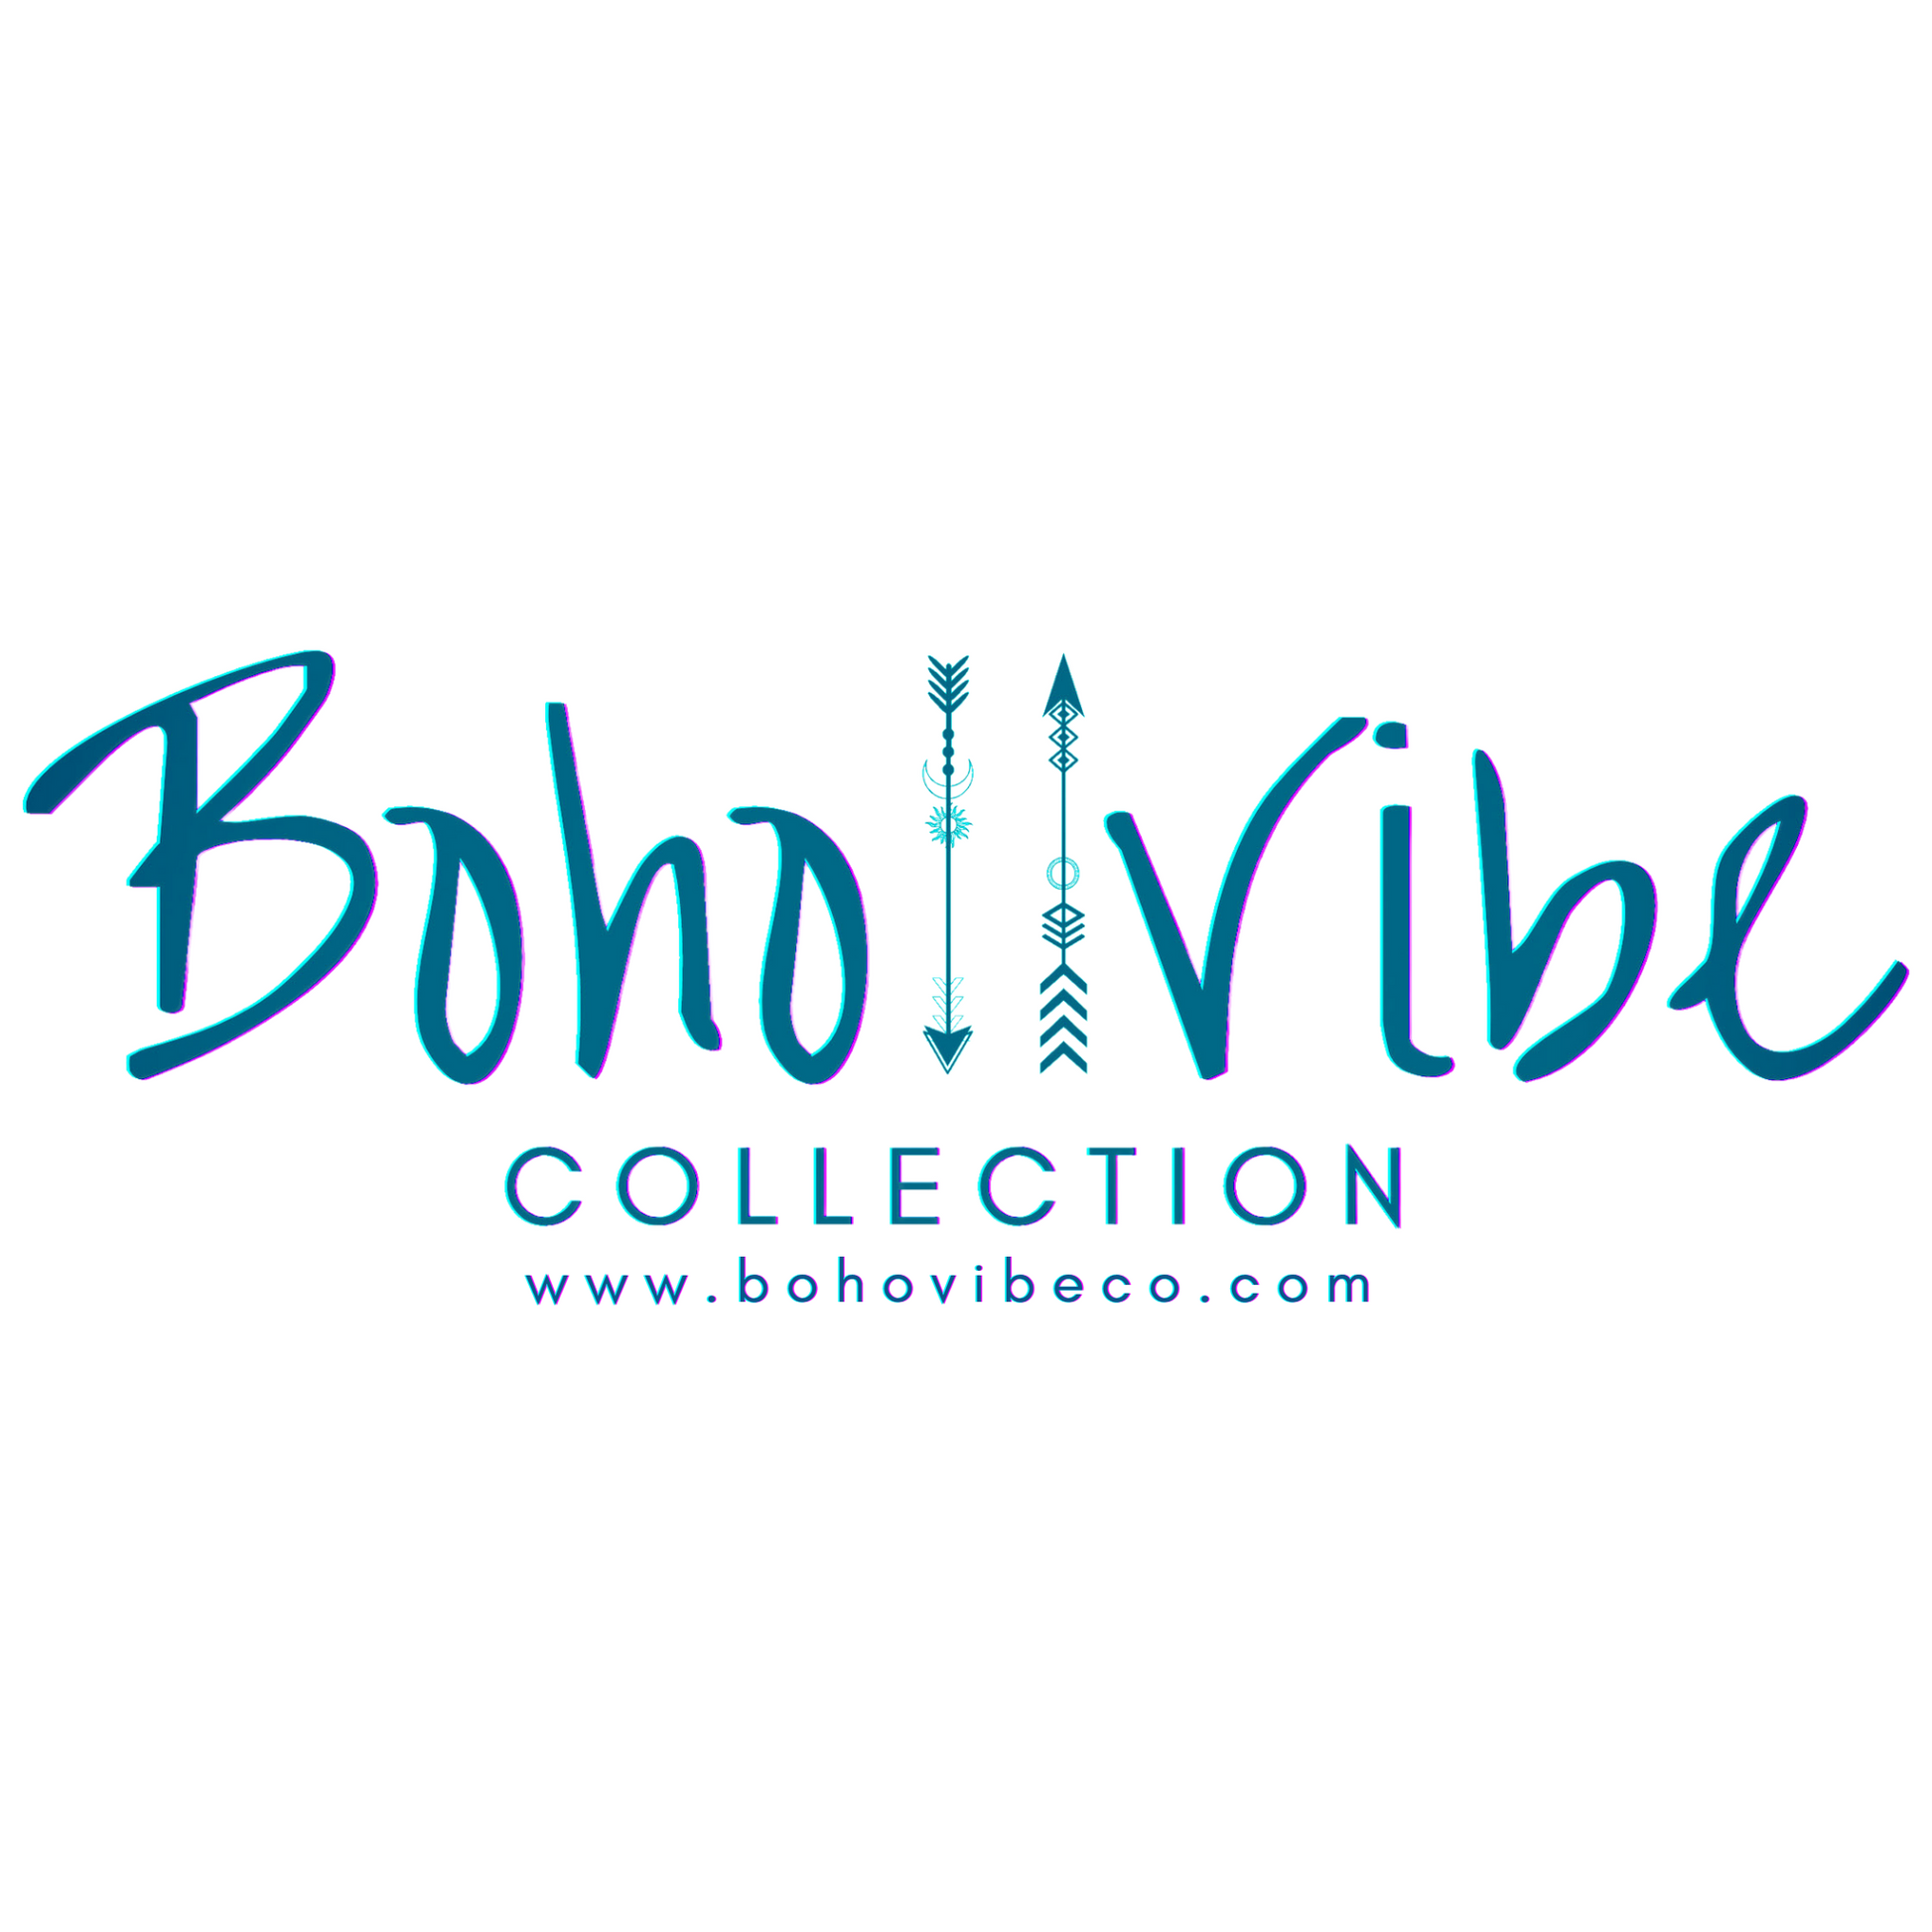 Boho ↡↟ Vibe Collection ↠ Rattan Style Flower Petal Floor Lamp 